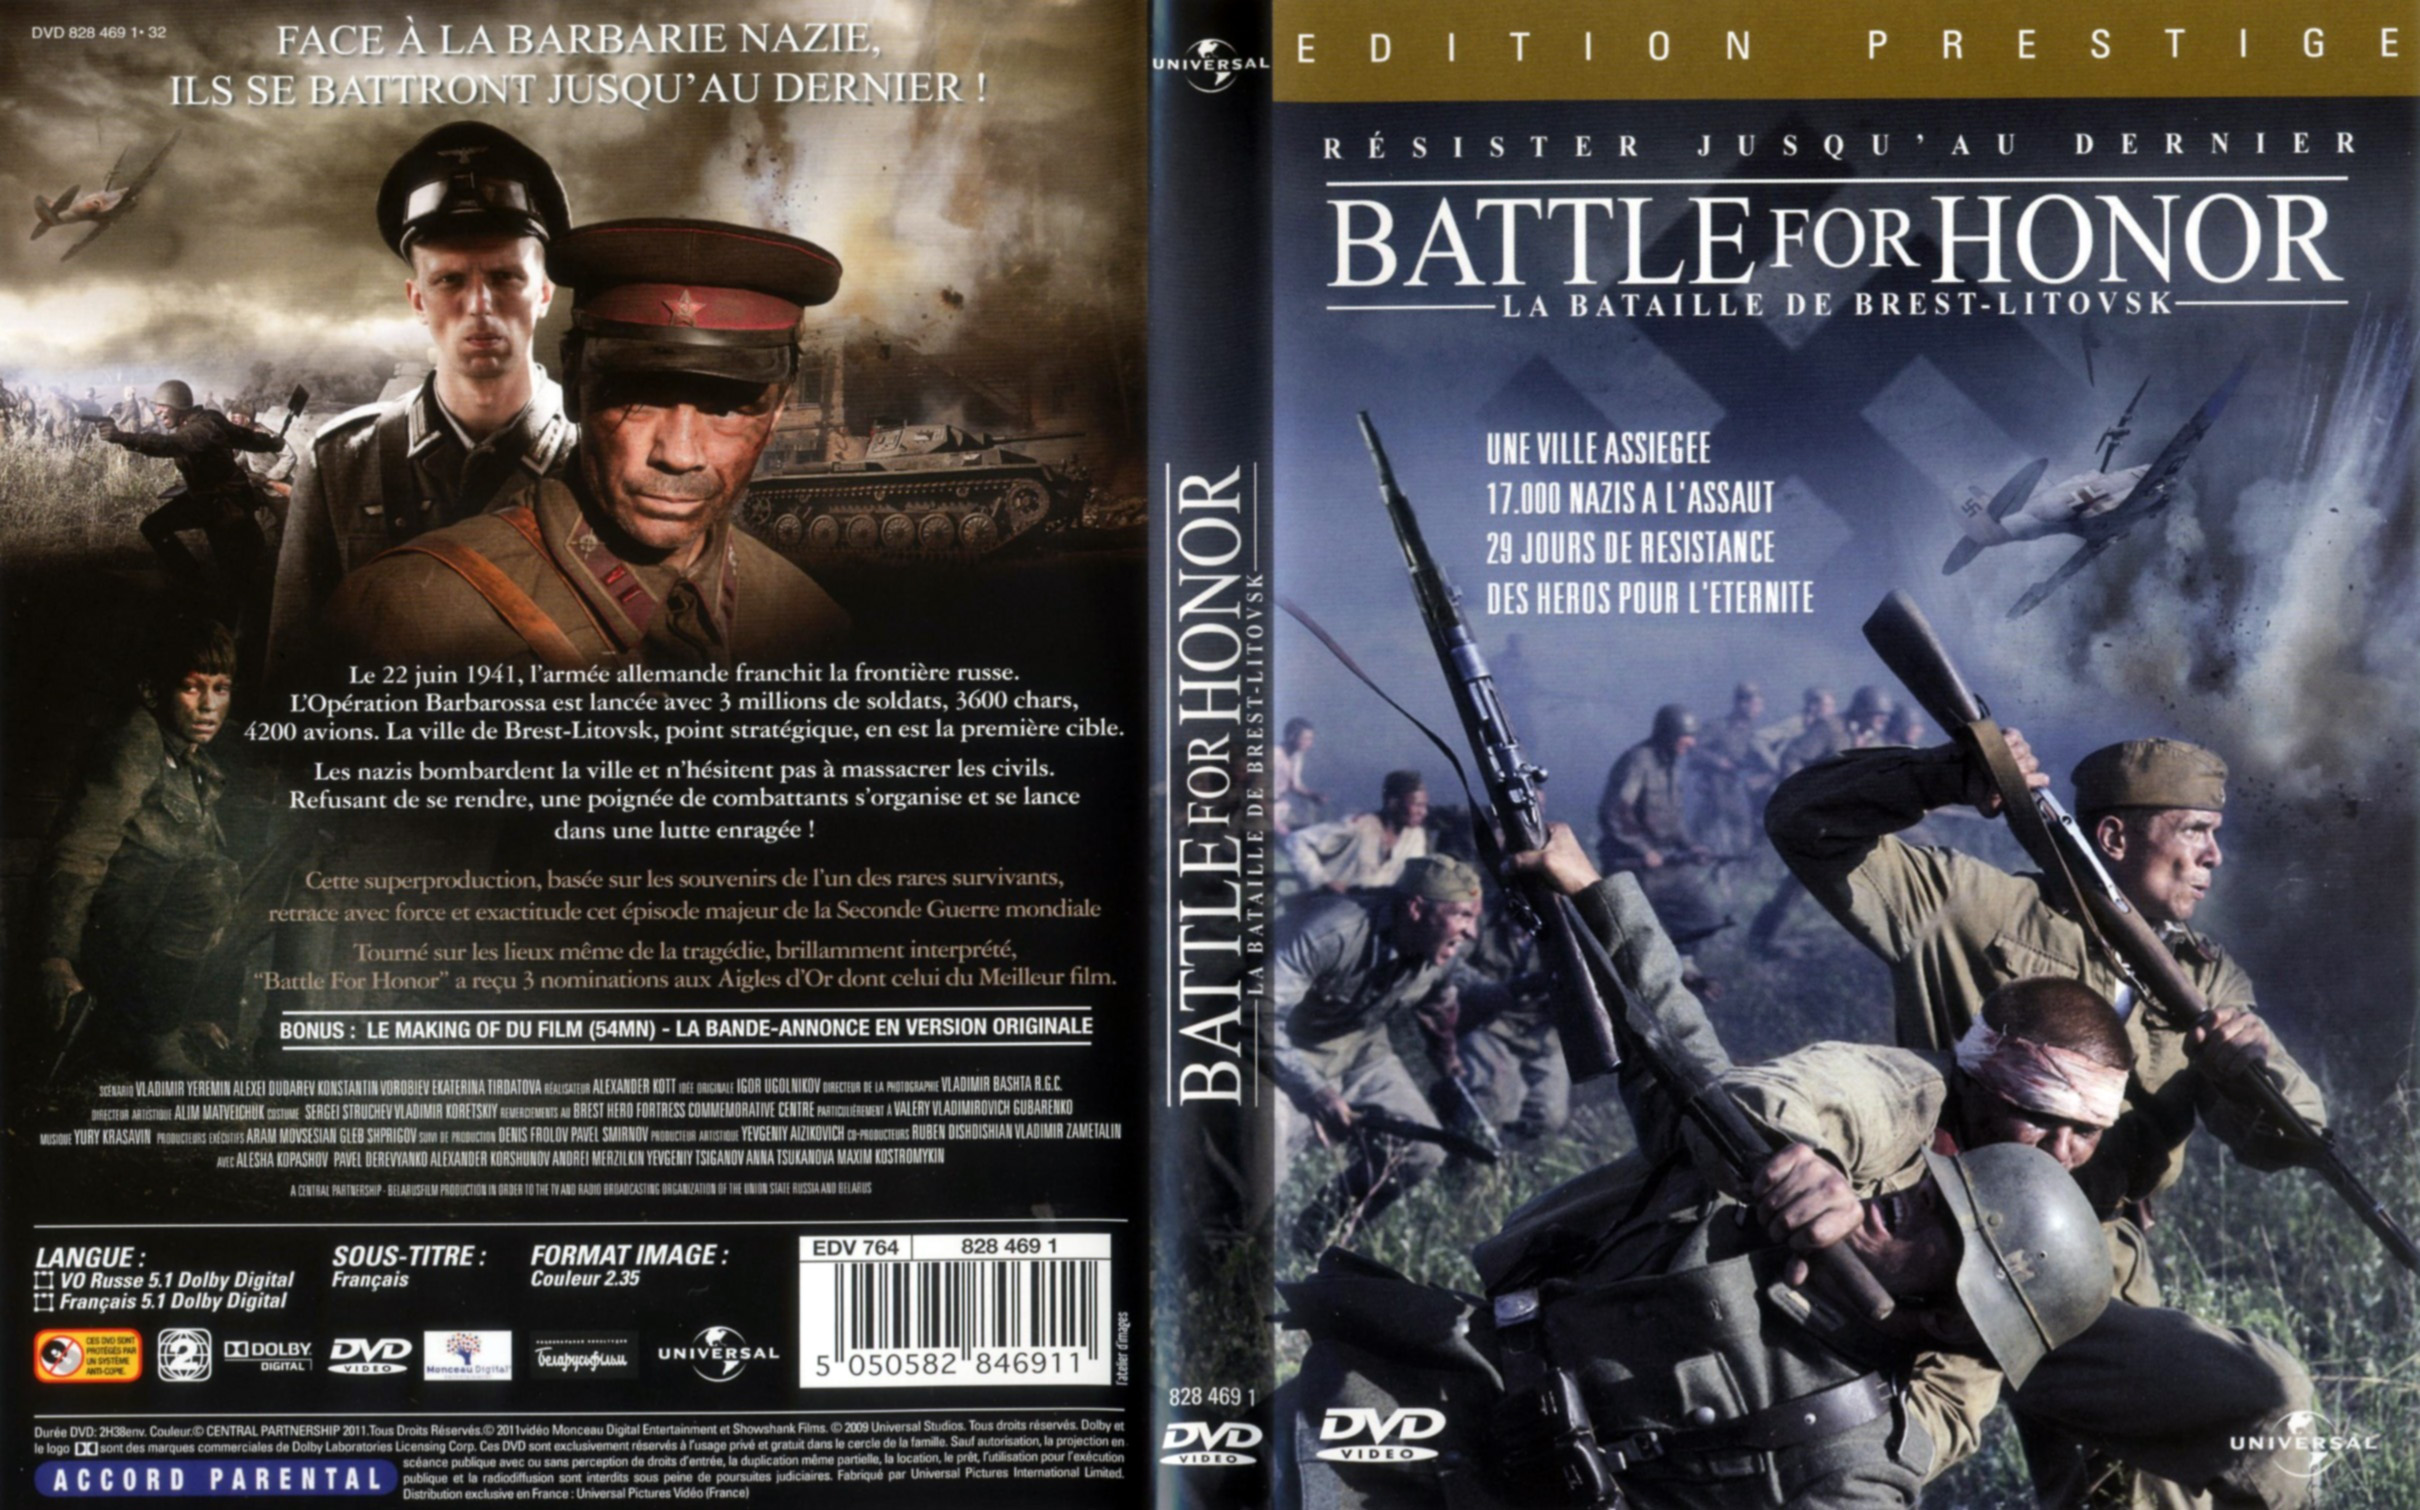 Jaquette DVD Battle for honor